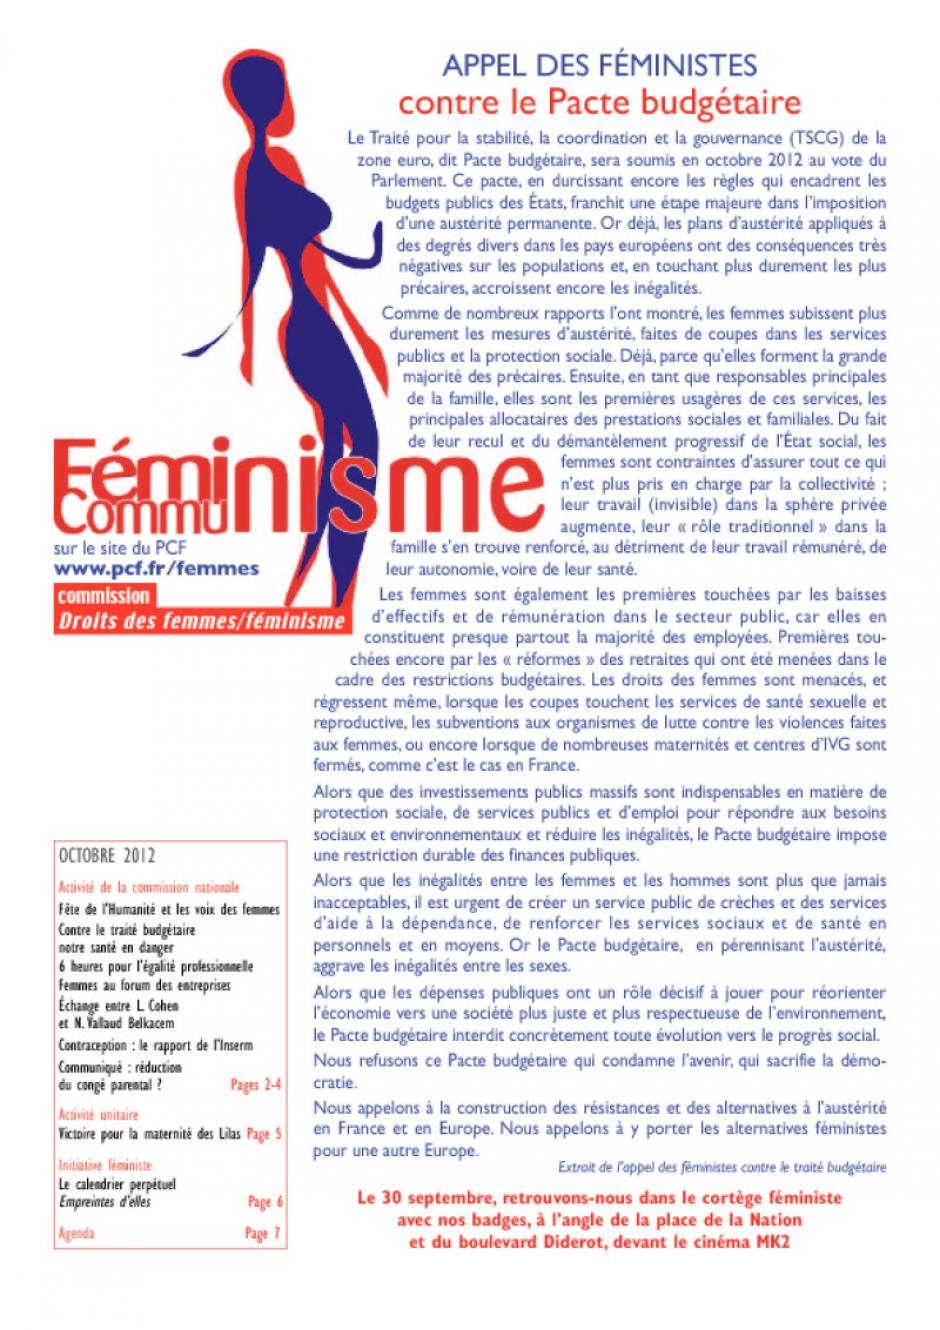 COMMUNISTES FEMINISTES - BULLETIN OCTOBRE 2012